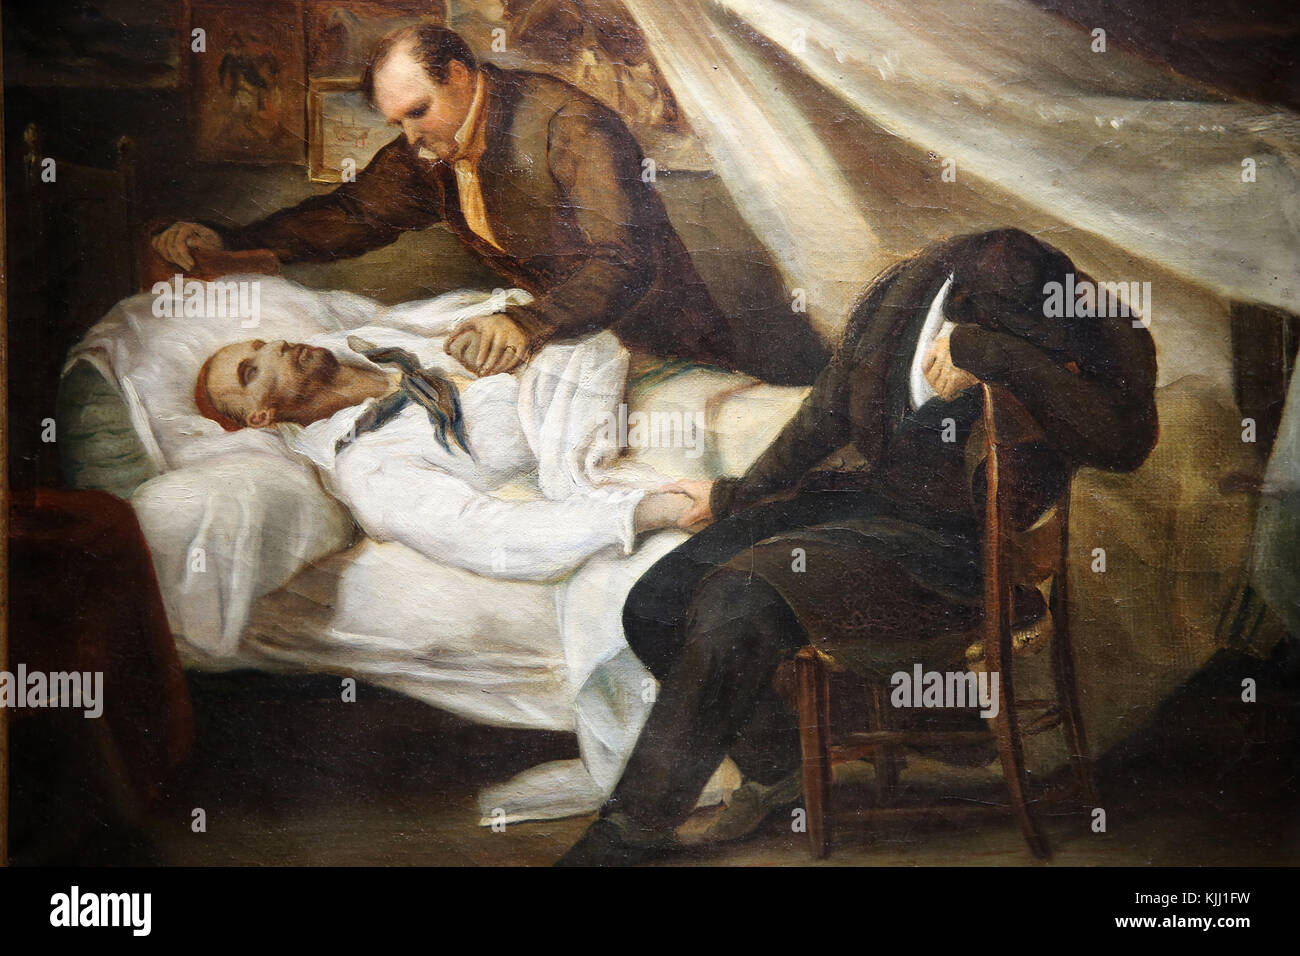 MusŽe de la Vie Romantique, Parigi. Ary Scheffer, La Mort de ThŽodore GŽricault, 1824, huile sur toile. La Francia. Foto Stock